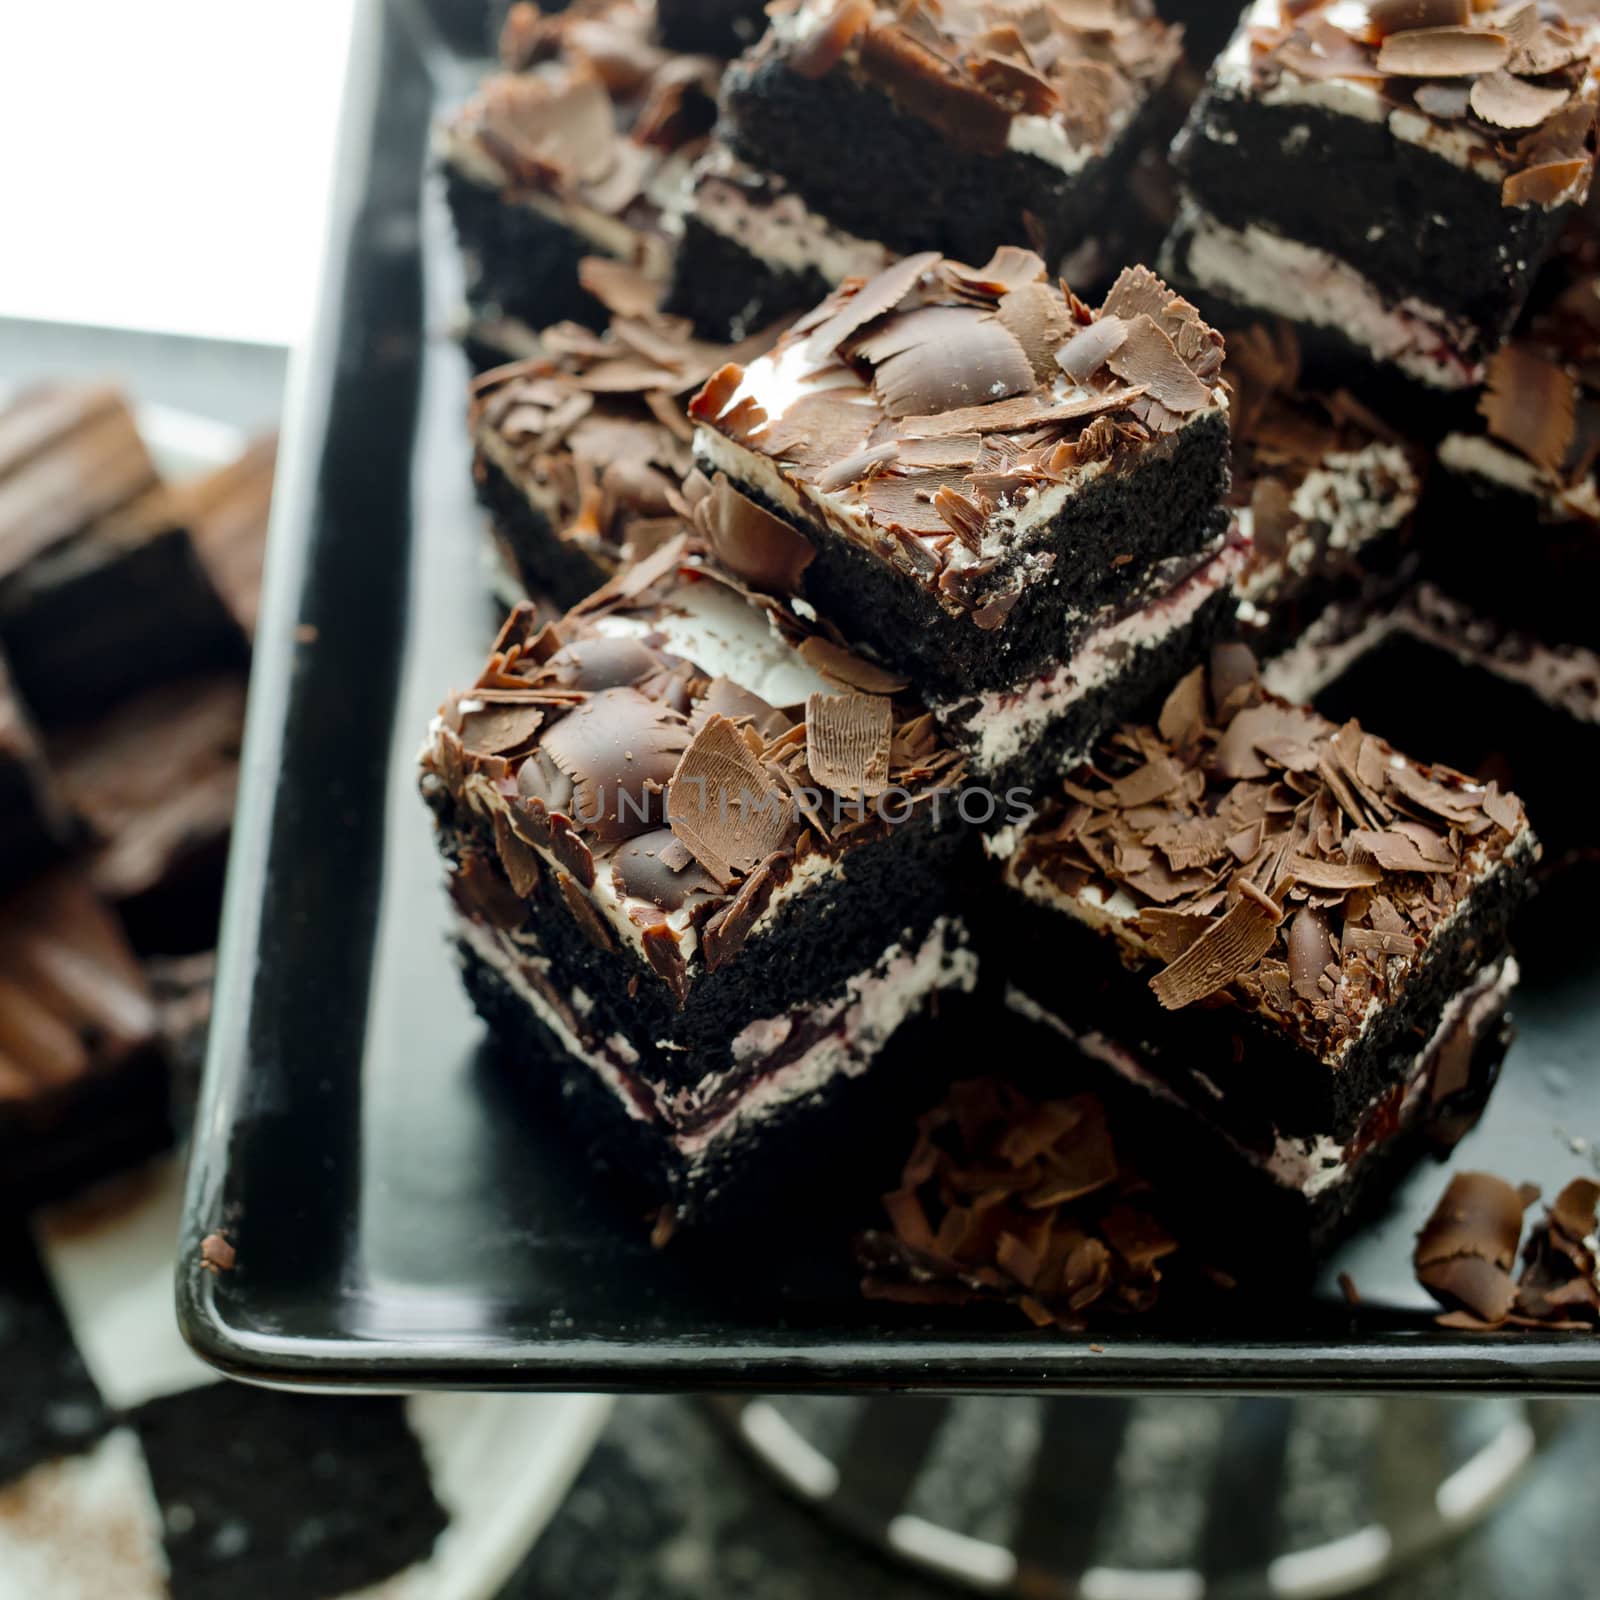 Cake chocolate brownies on bake tray